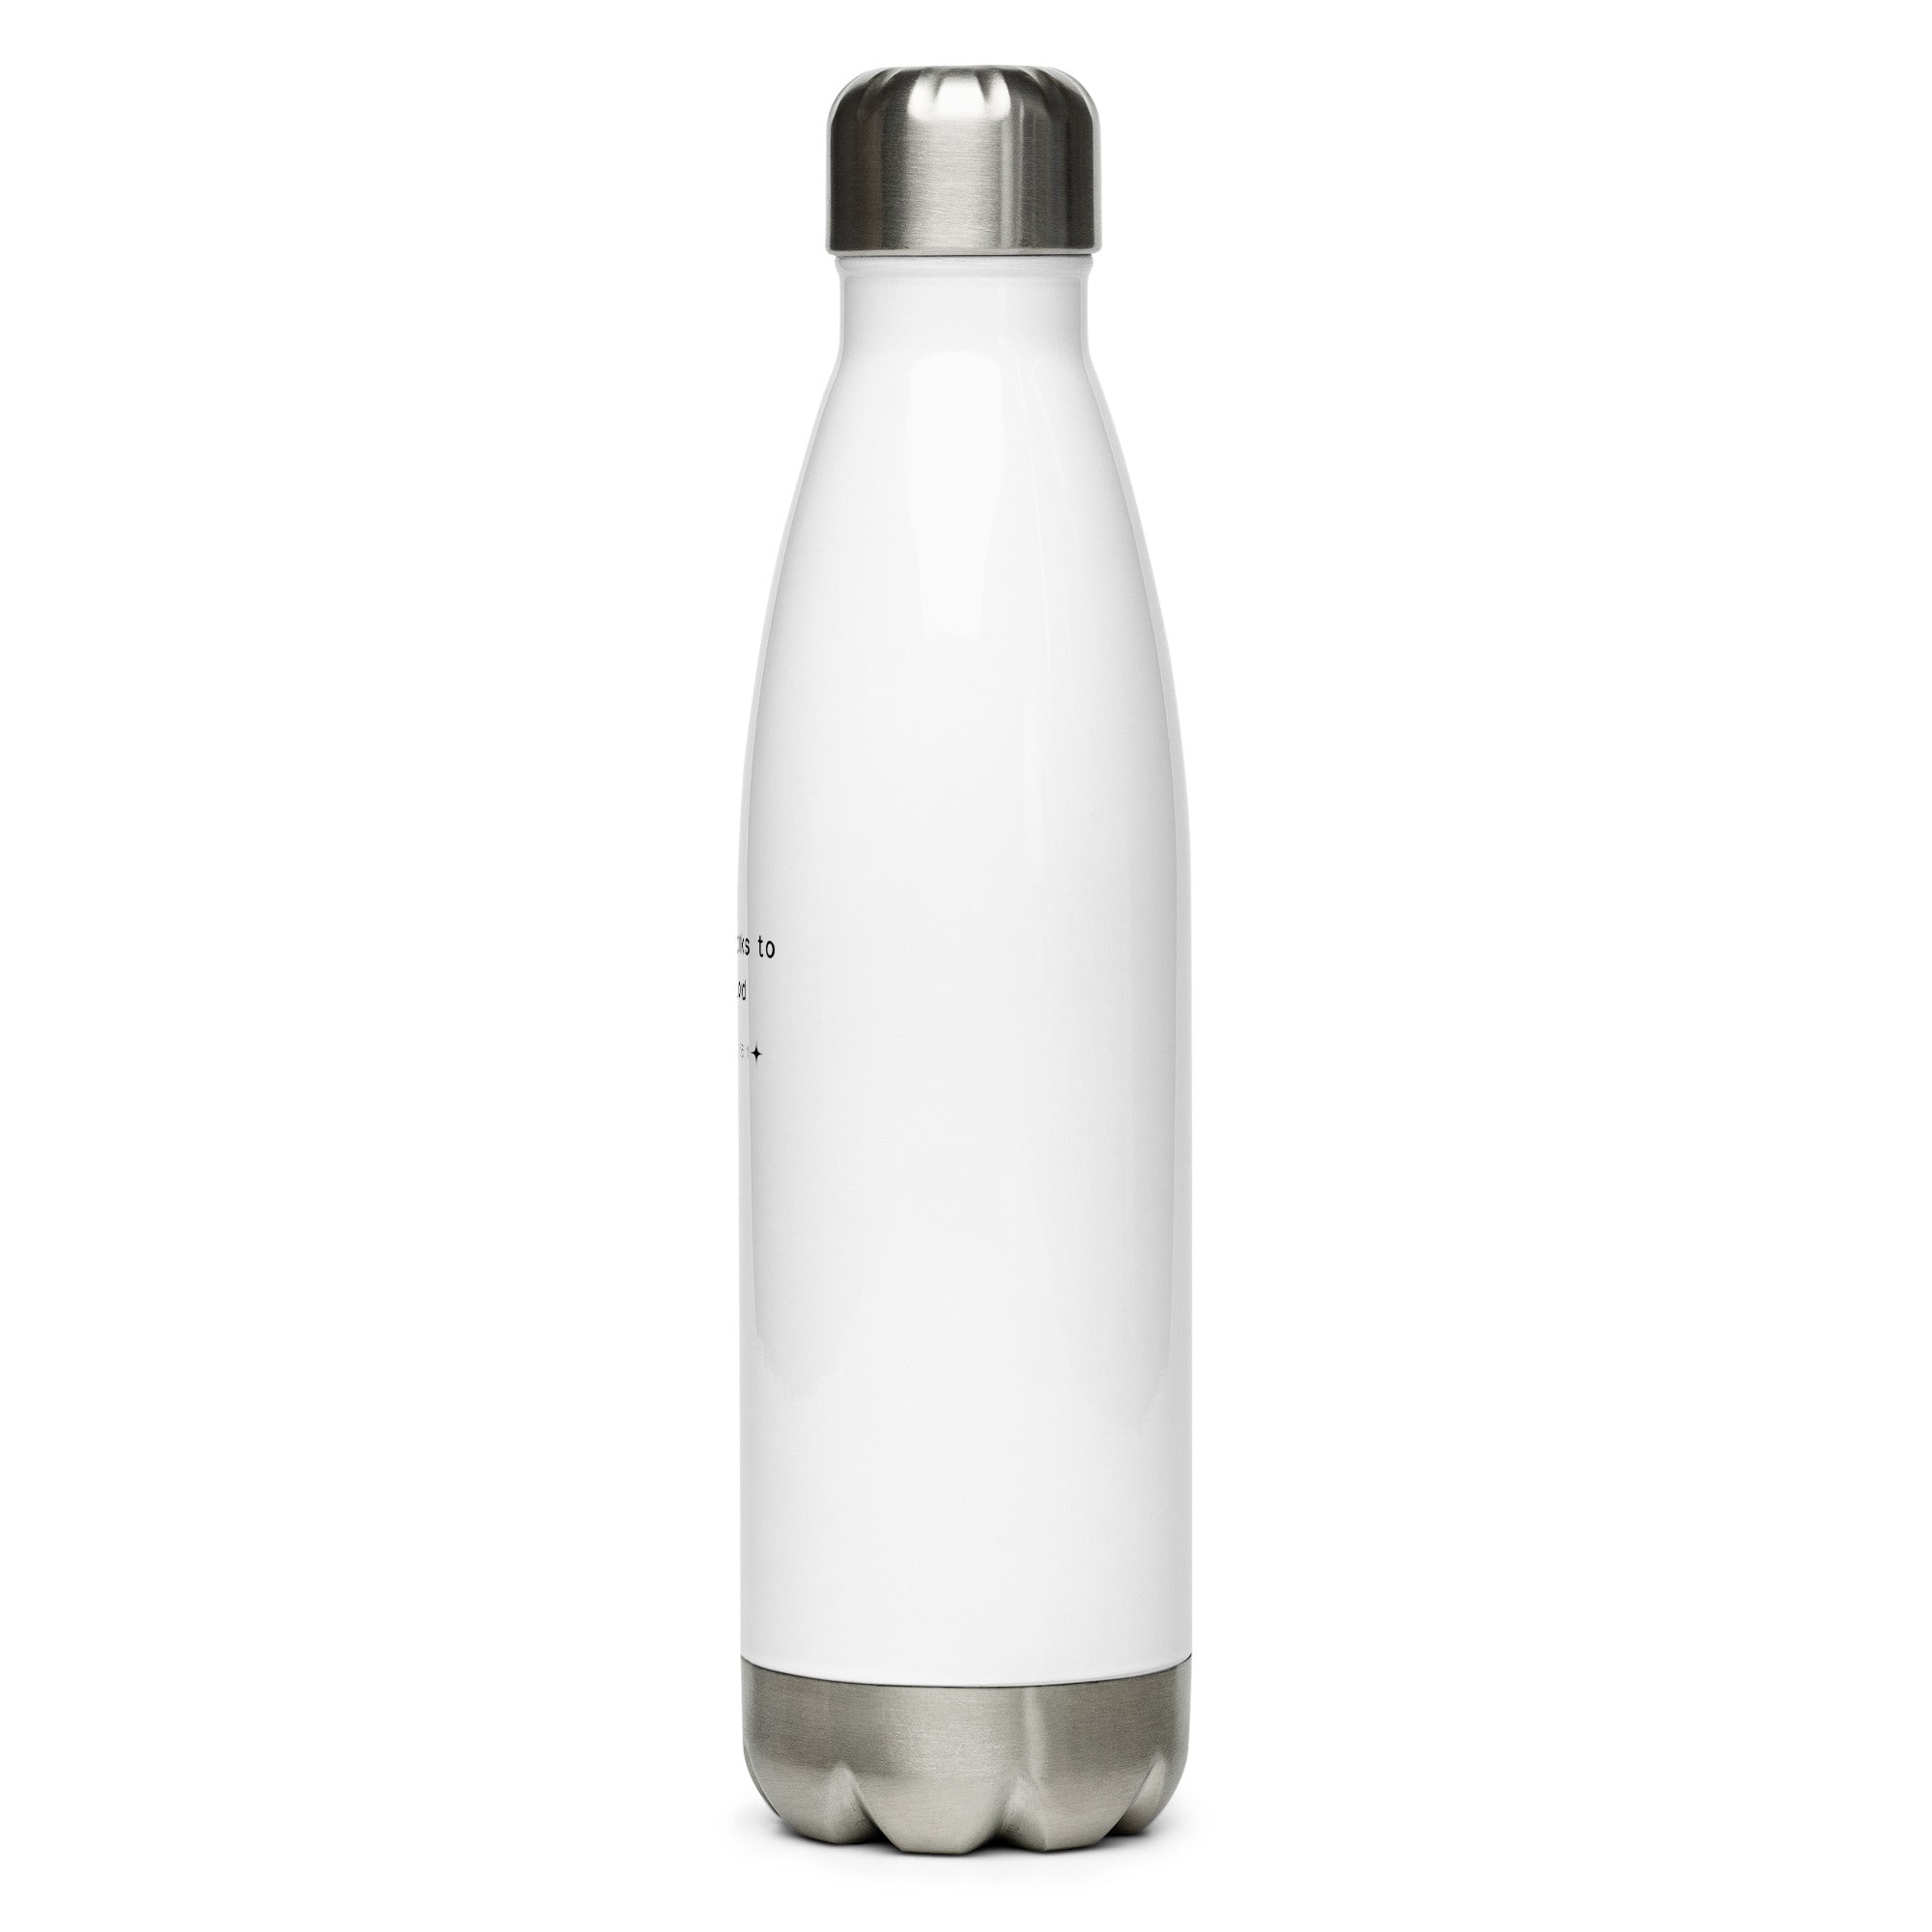 Stainless steel water bottle - Psalm 136:1